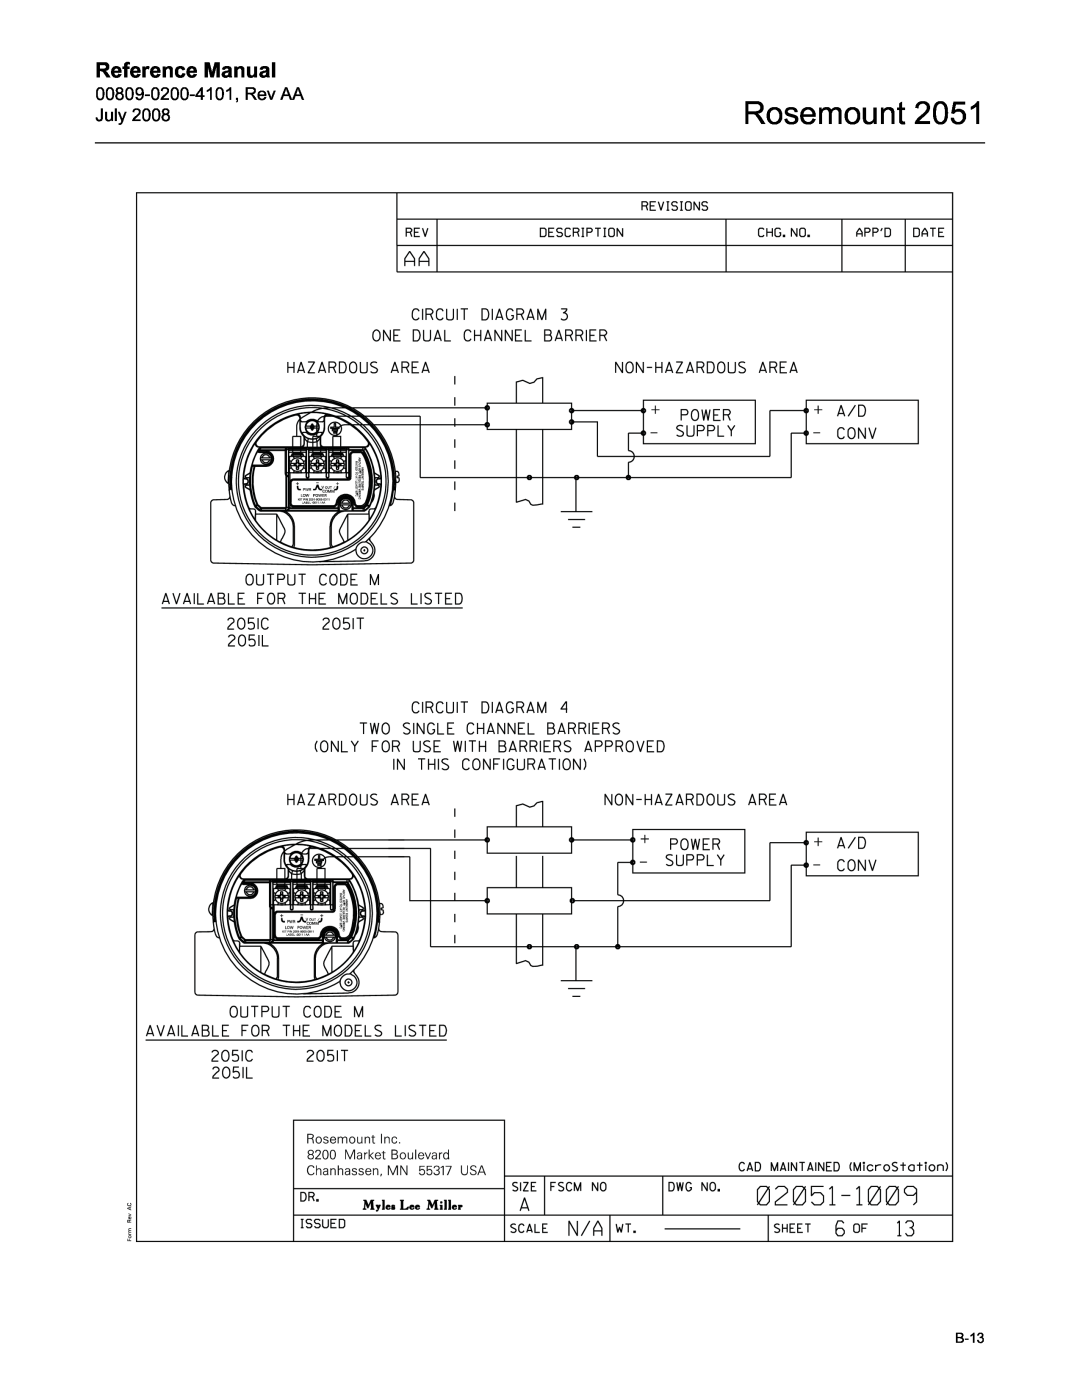 Emerson Process Management 2051 manual Rosemount, Reference Manual, B-13 